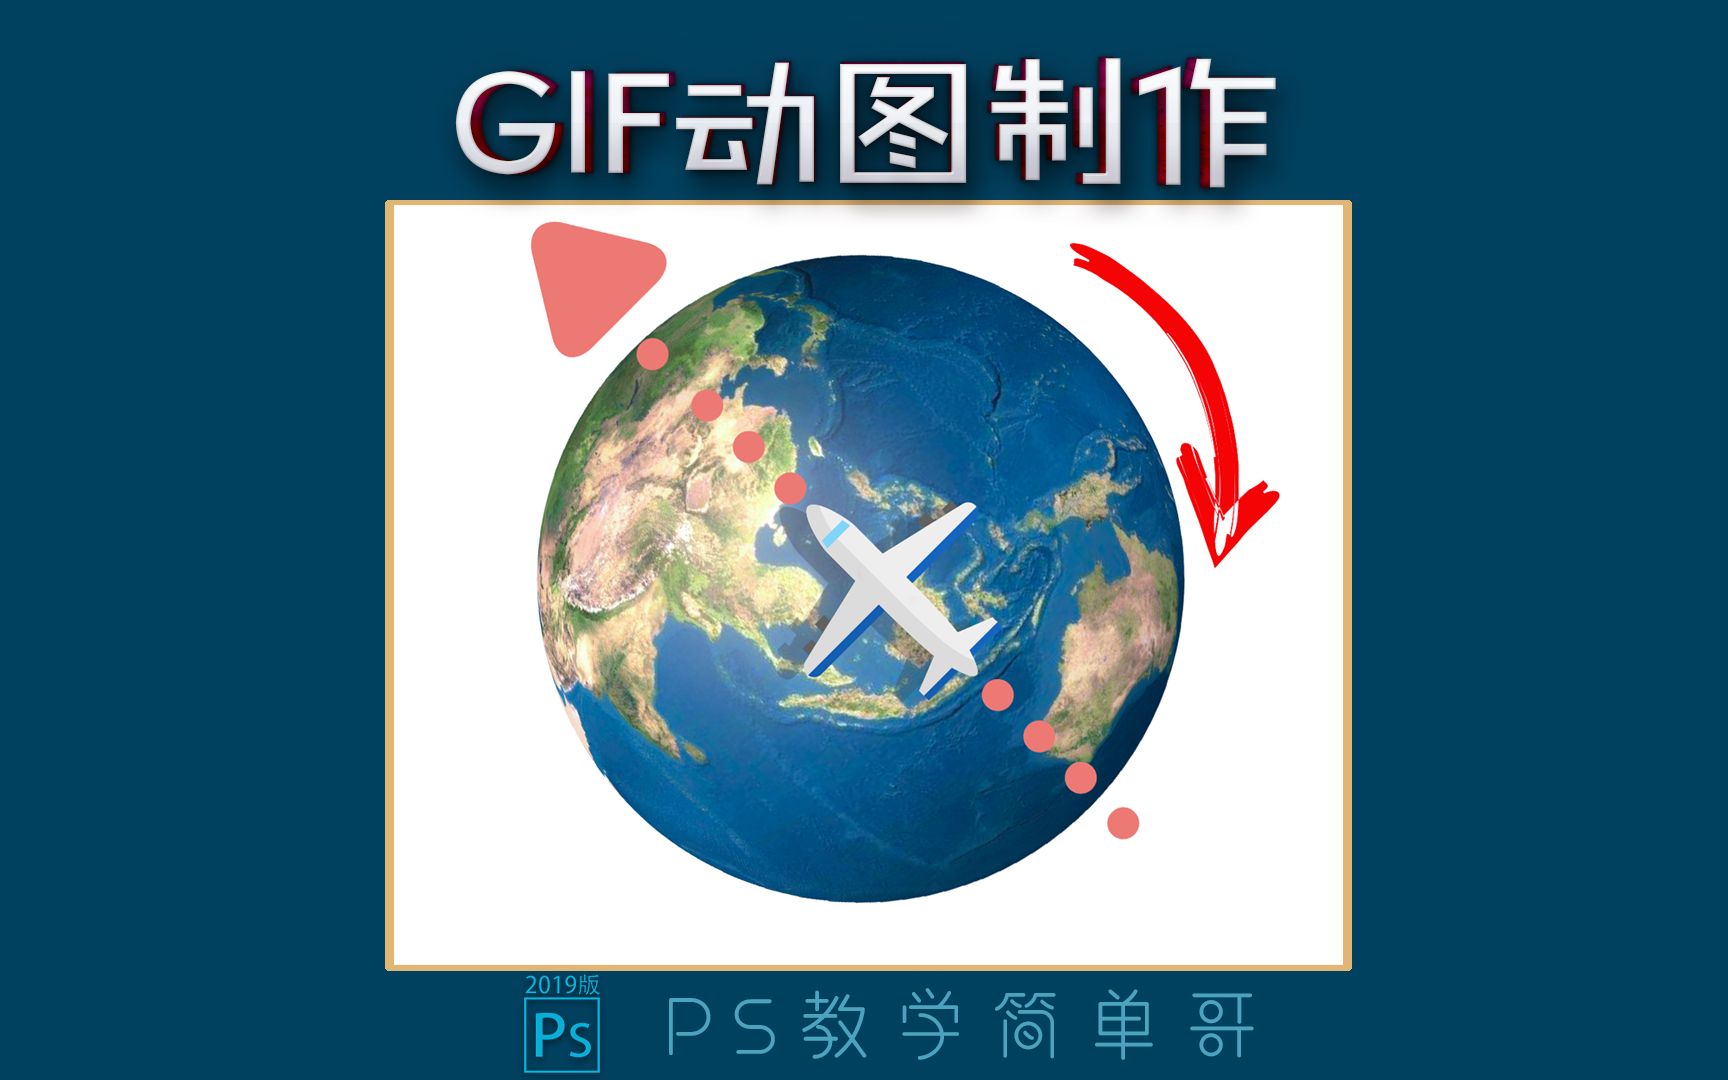 PS如何将图片制作成gif动态图 ps制作gif动态图教程_photoshop制作gif动画 - 神拓网